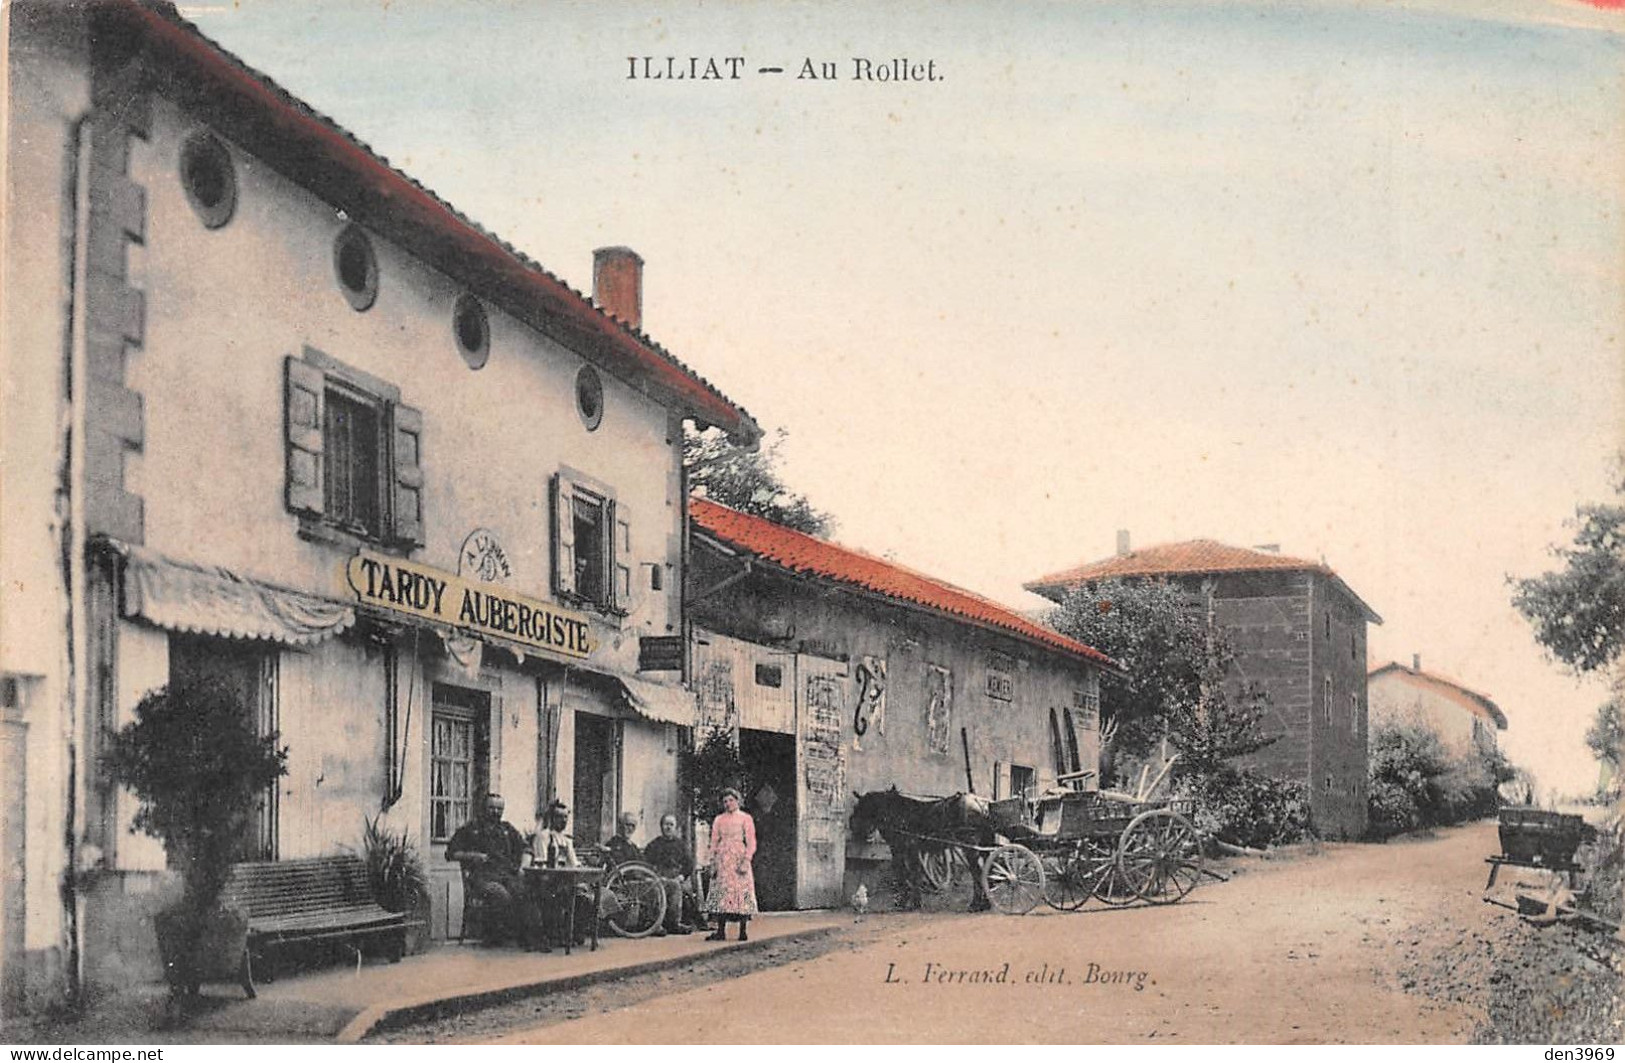 ILLIAT (Ain) - Au Rollet - Tardy Aubergiste - Restaurant, Calèche - Tirage Couleurs - Ohne Zuordnung